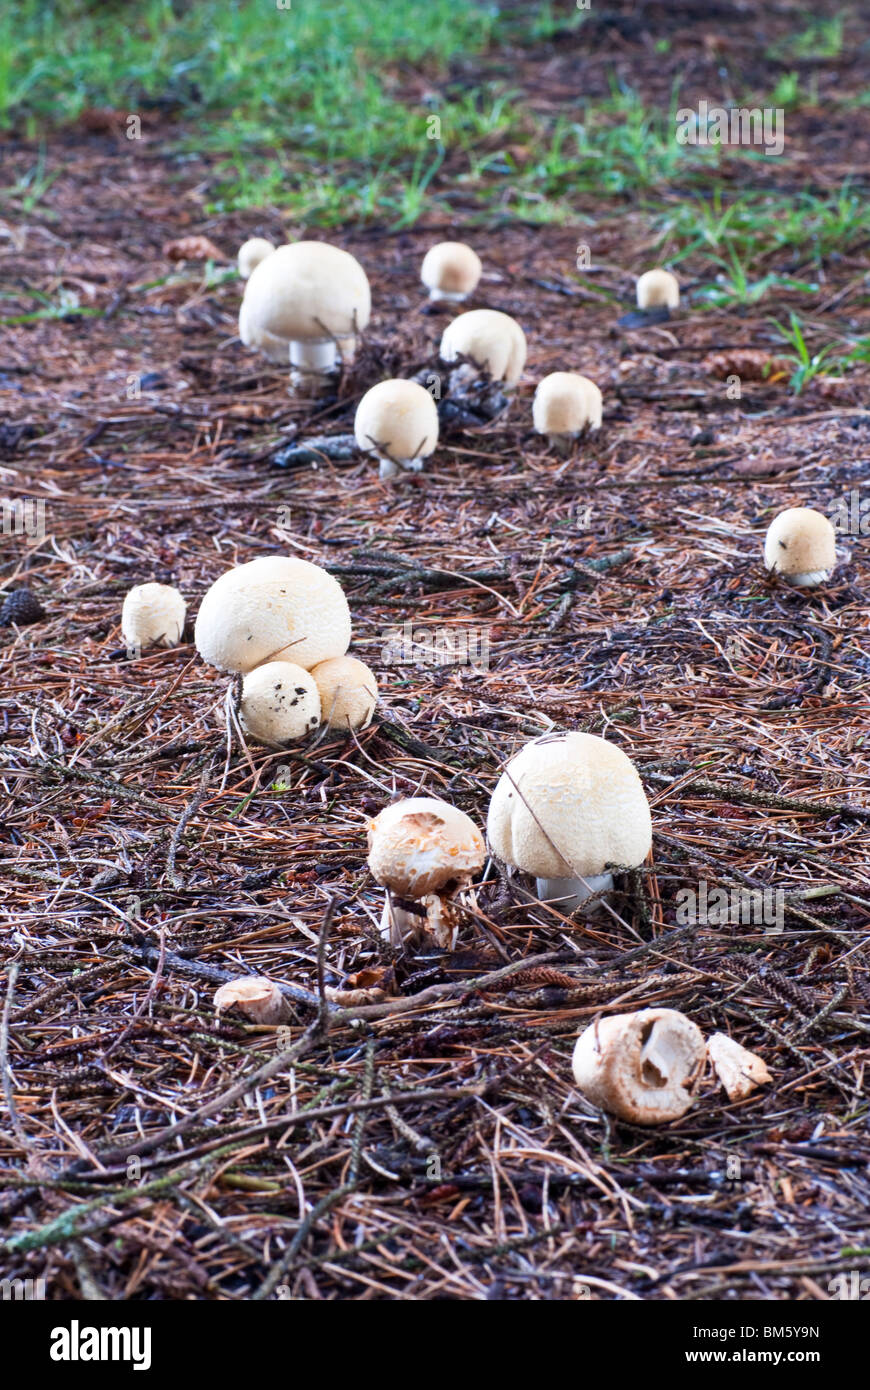 Edible mushroom Stock Photo